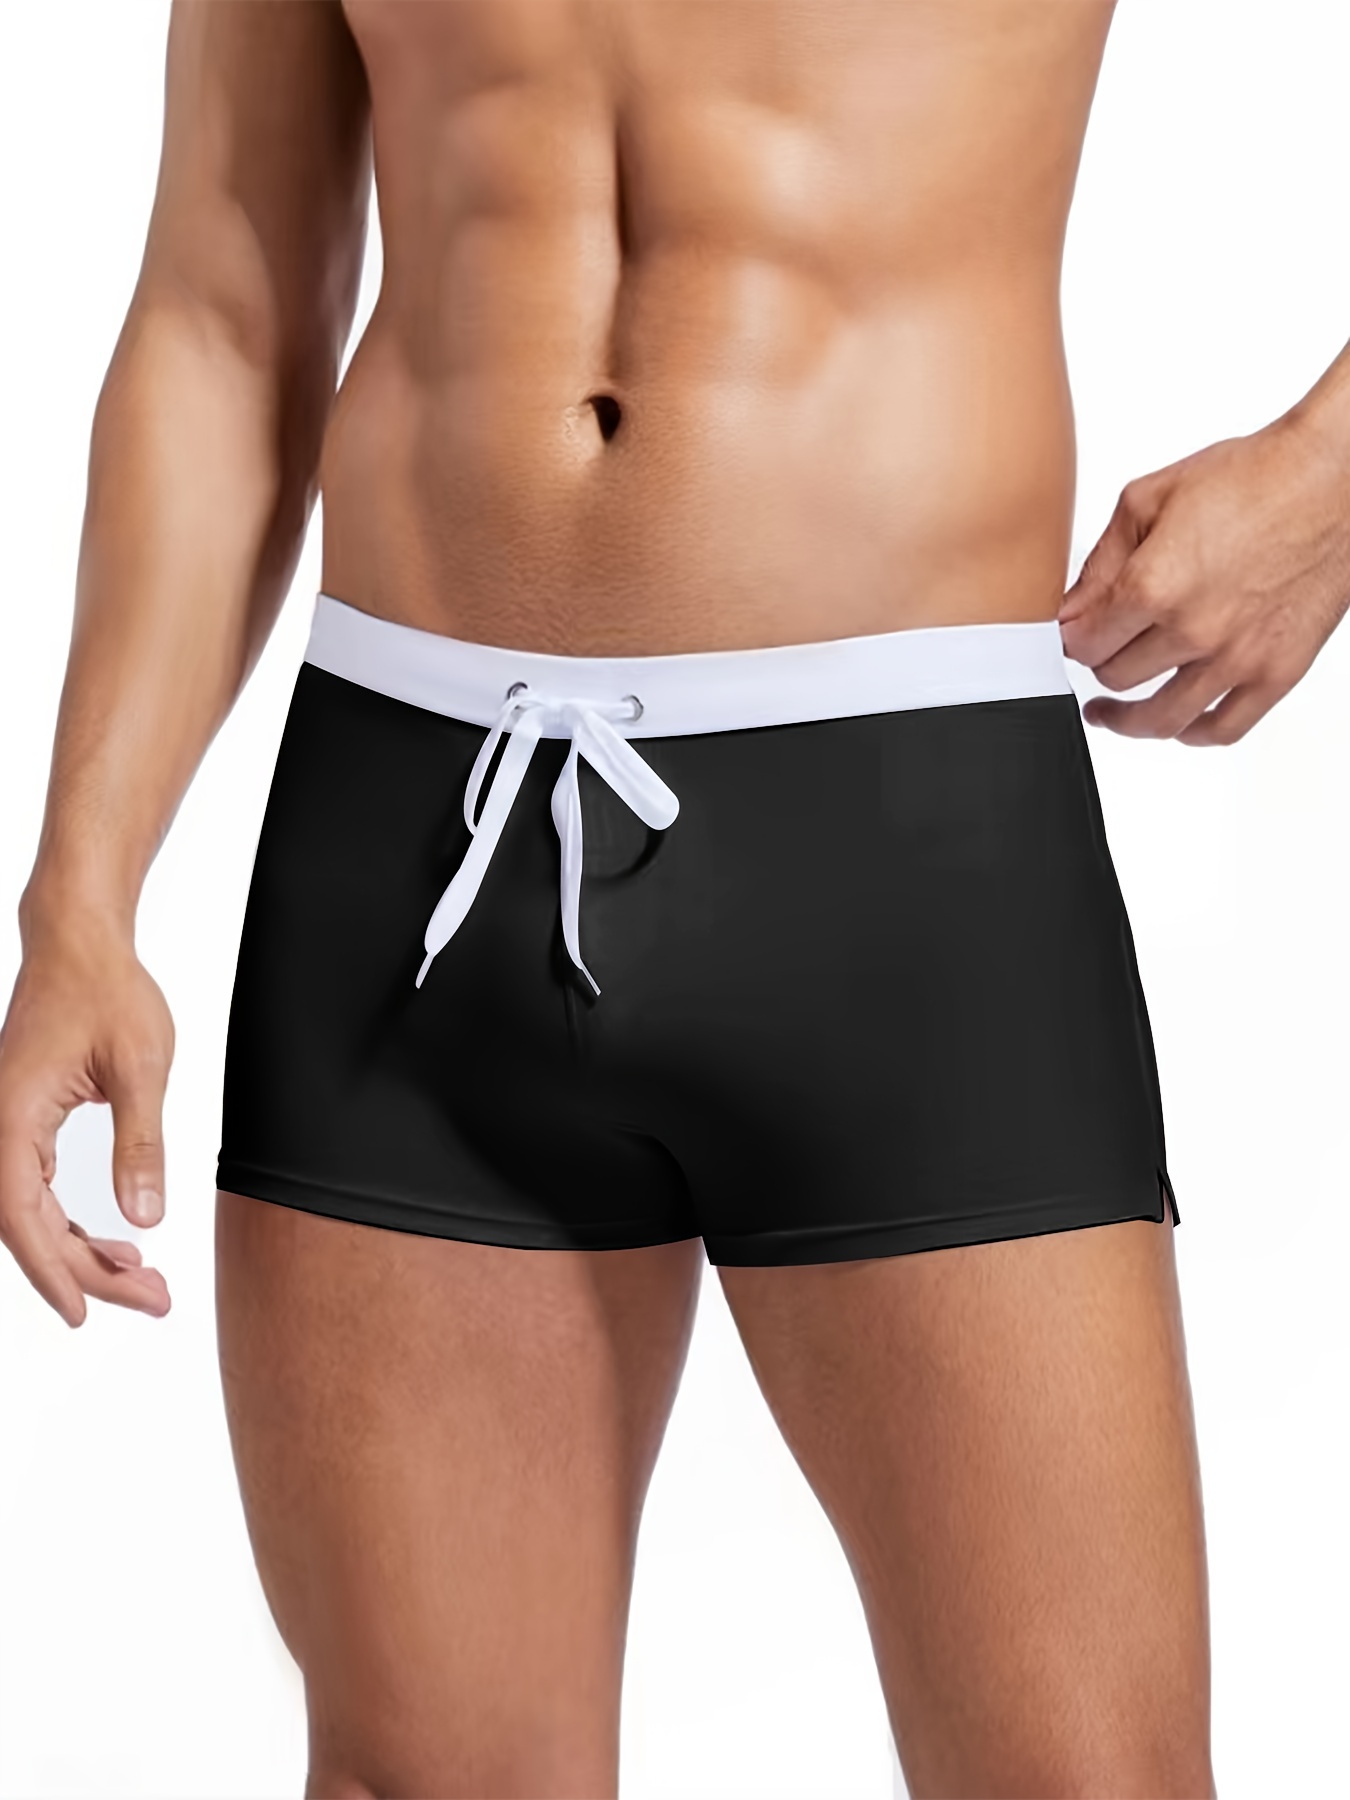 Men Swim Beach Pants Shorts Swimwear Swimming Trunks Underwear Boxer Briefs